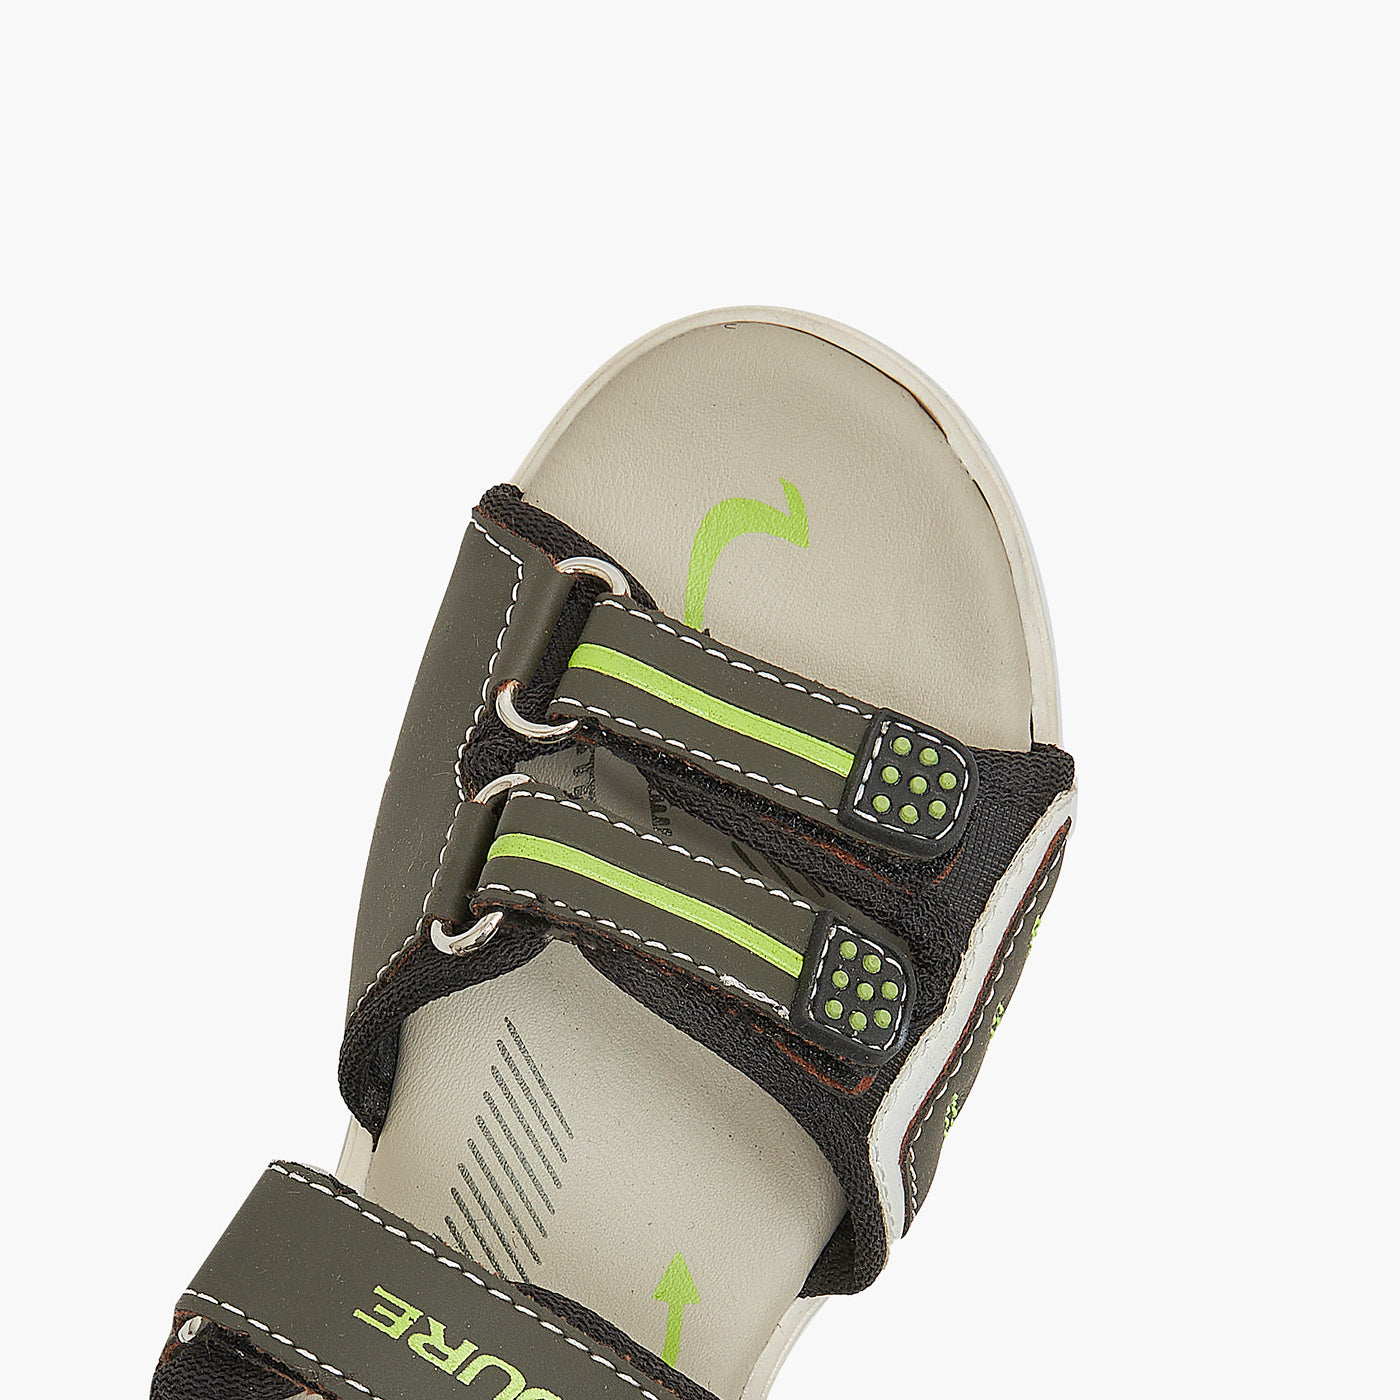 Stylish Velcro Boys Sandals